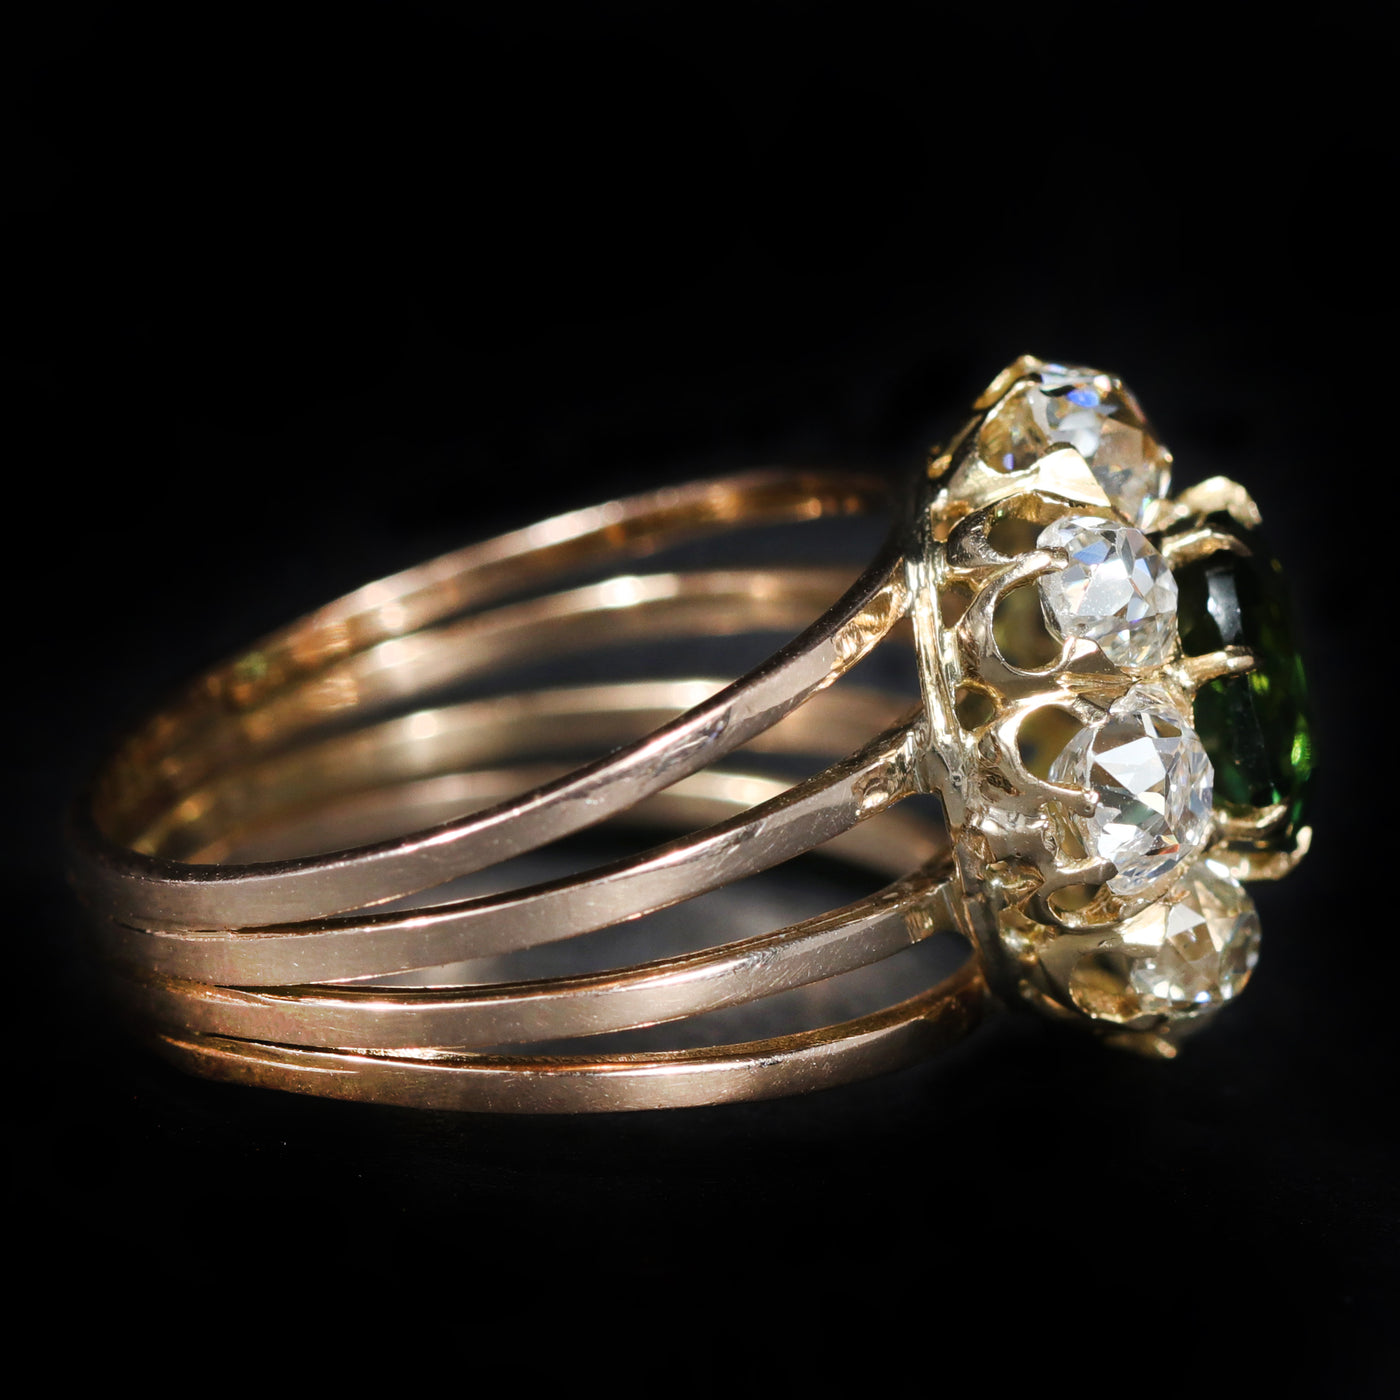 Victorian 1.23 Carat Green Tourmaline and Old Mine Cut Diamond Ring